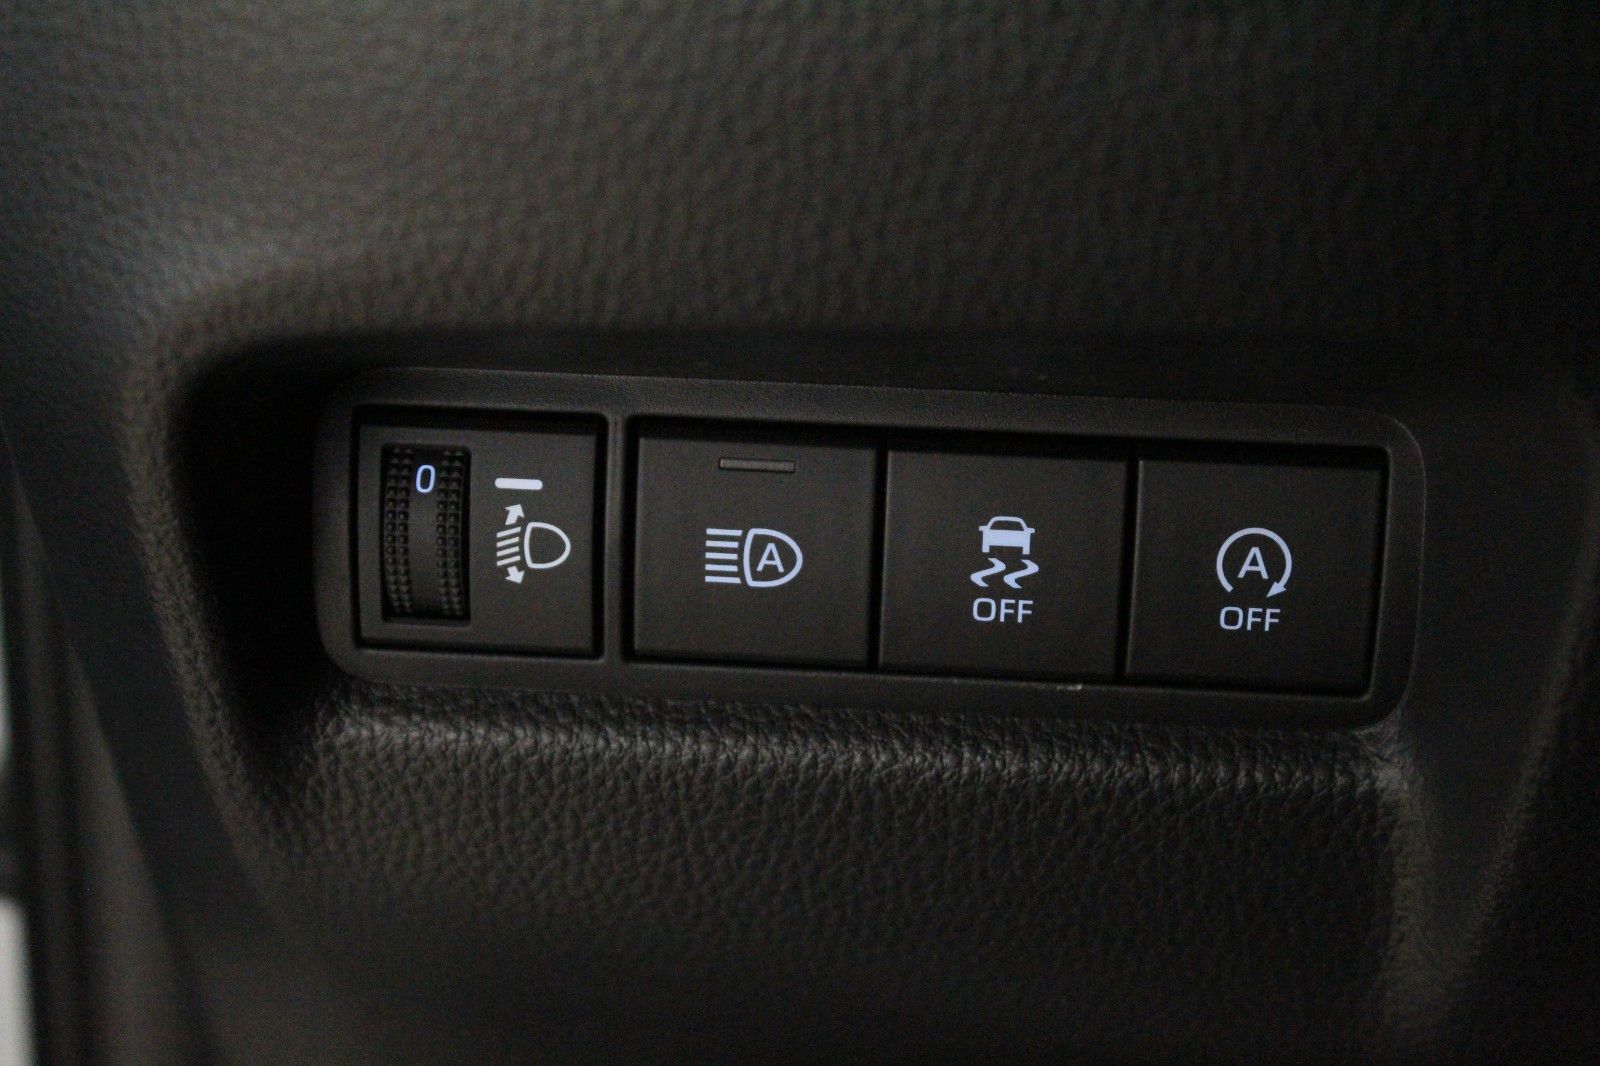 Fahrzeugabbildung Toyota Aygo X CVT UNDERCOVER Sonderedition + JBL-Paket